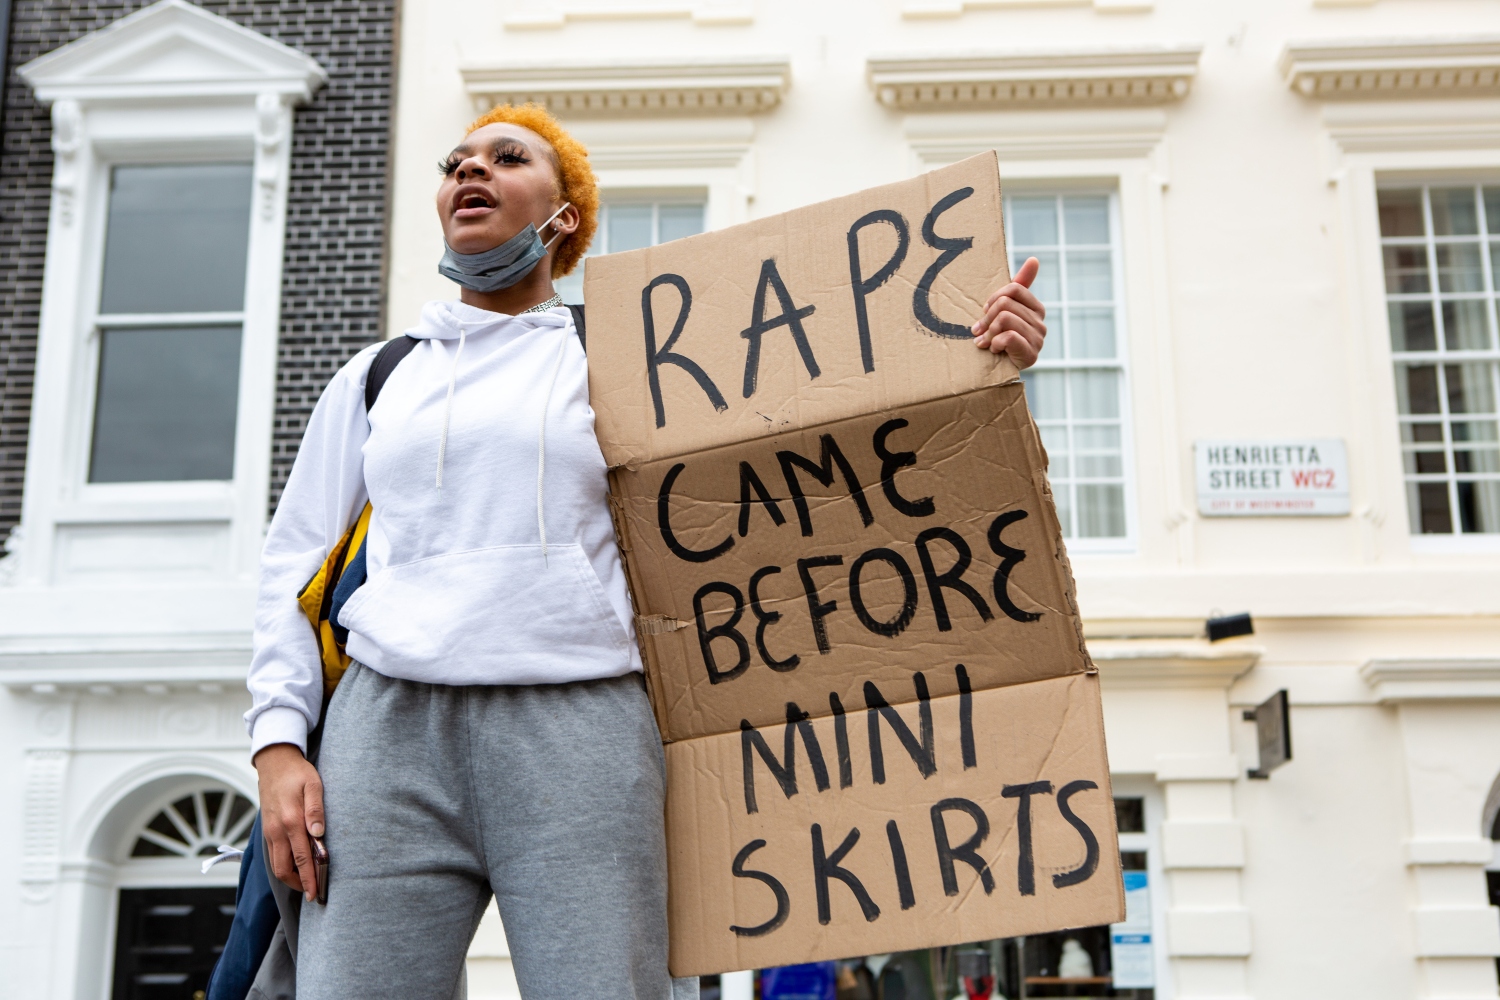 Rape came before mini skirts